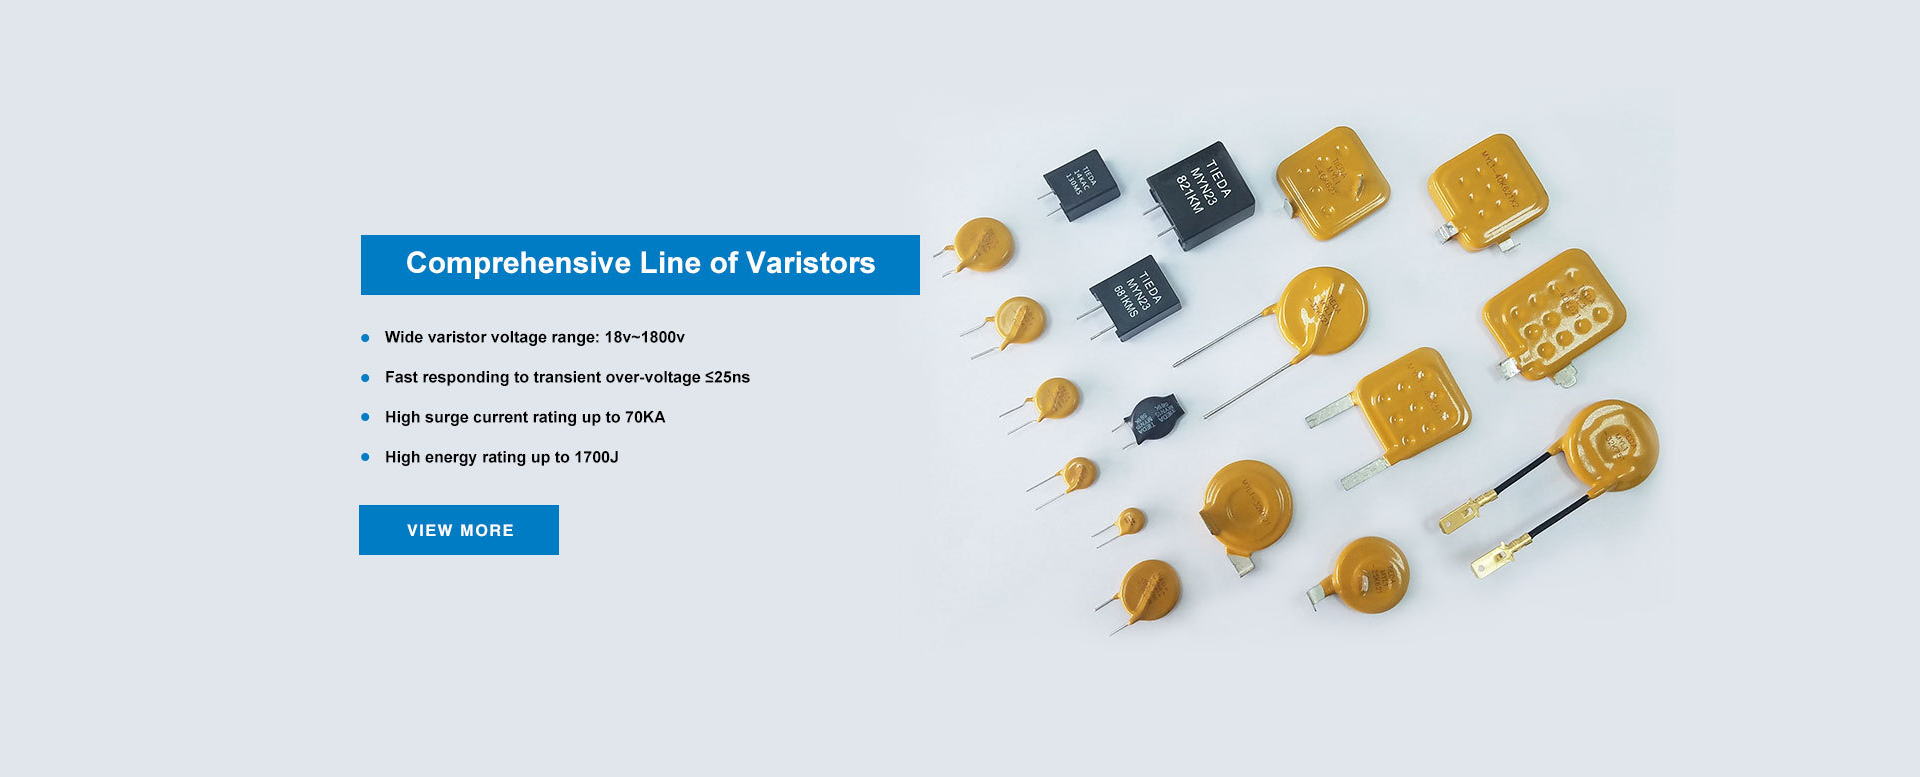 Comprehensive Line of Varistors